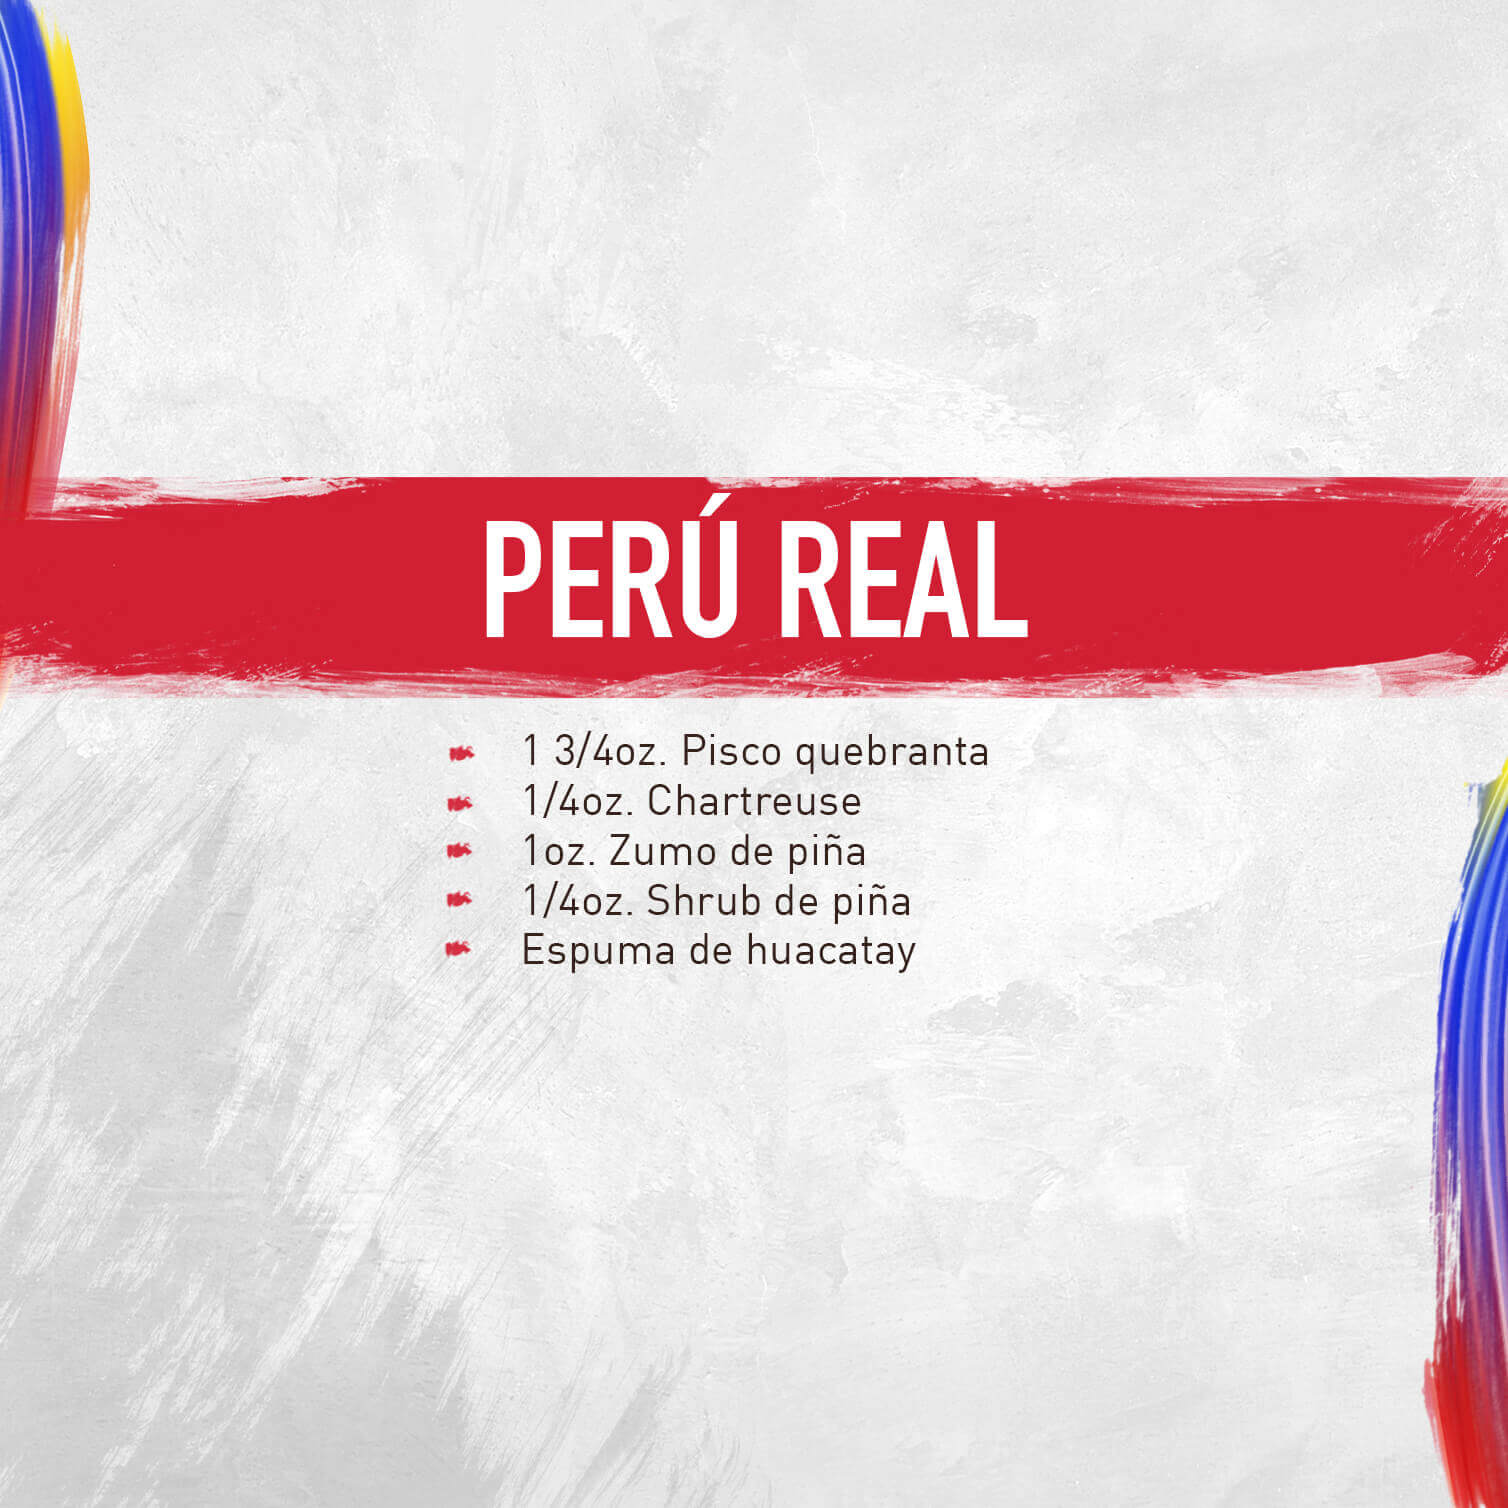 Peru-real-